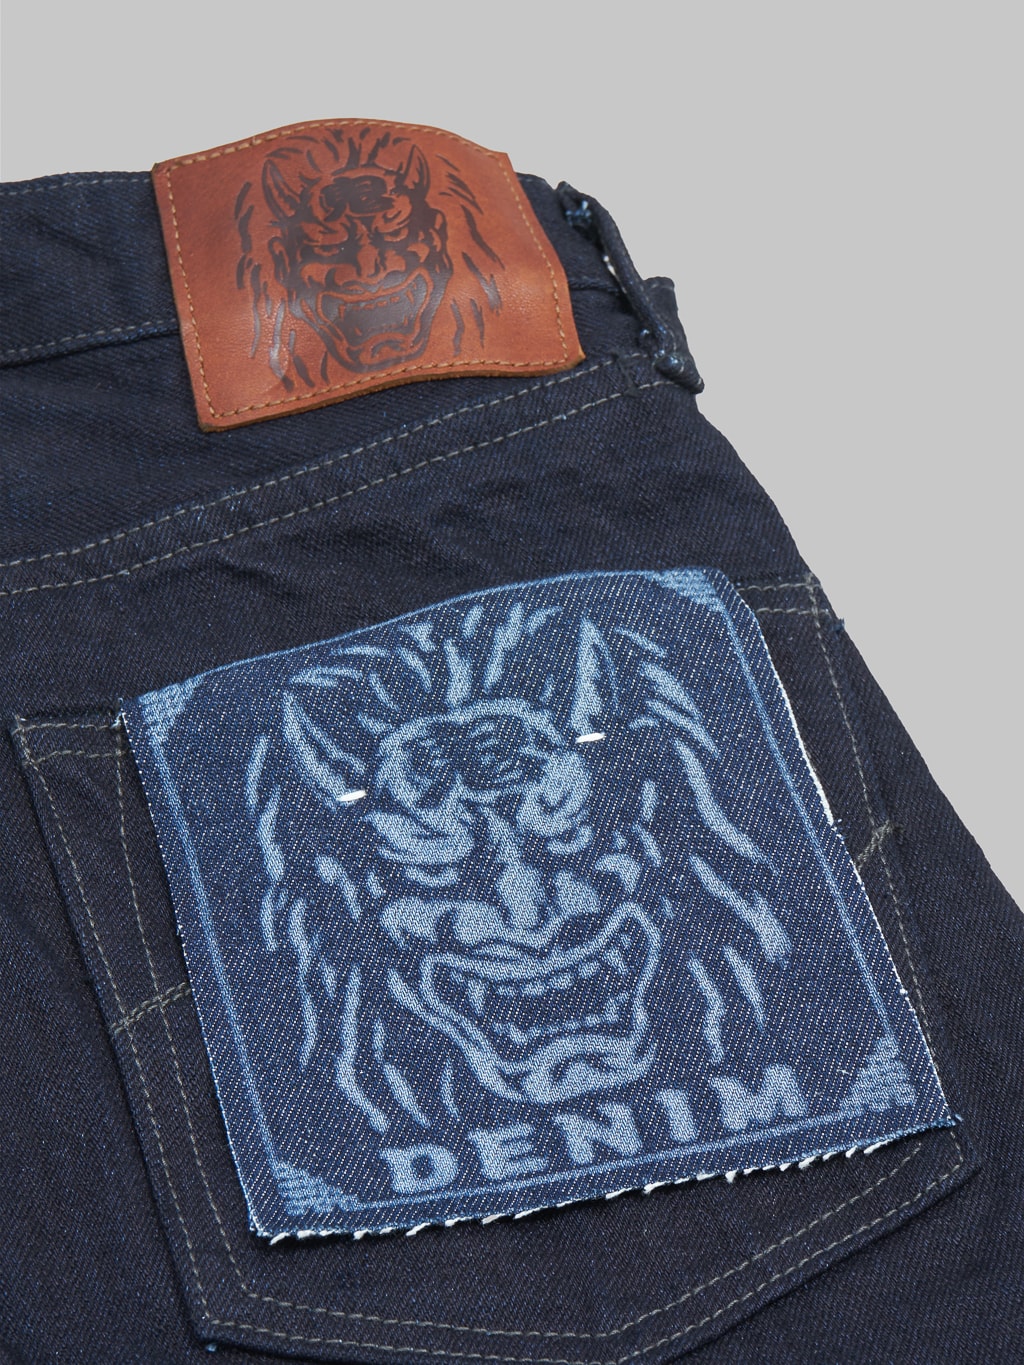 ONI Denim 622 Black Weft 14oz Relaxed Tapered Jeans pocket flasher